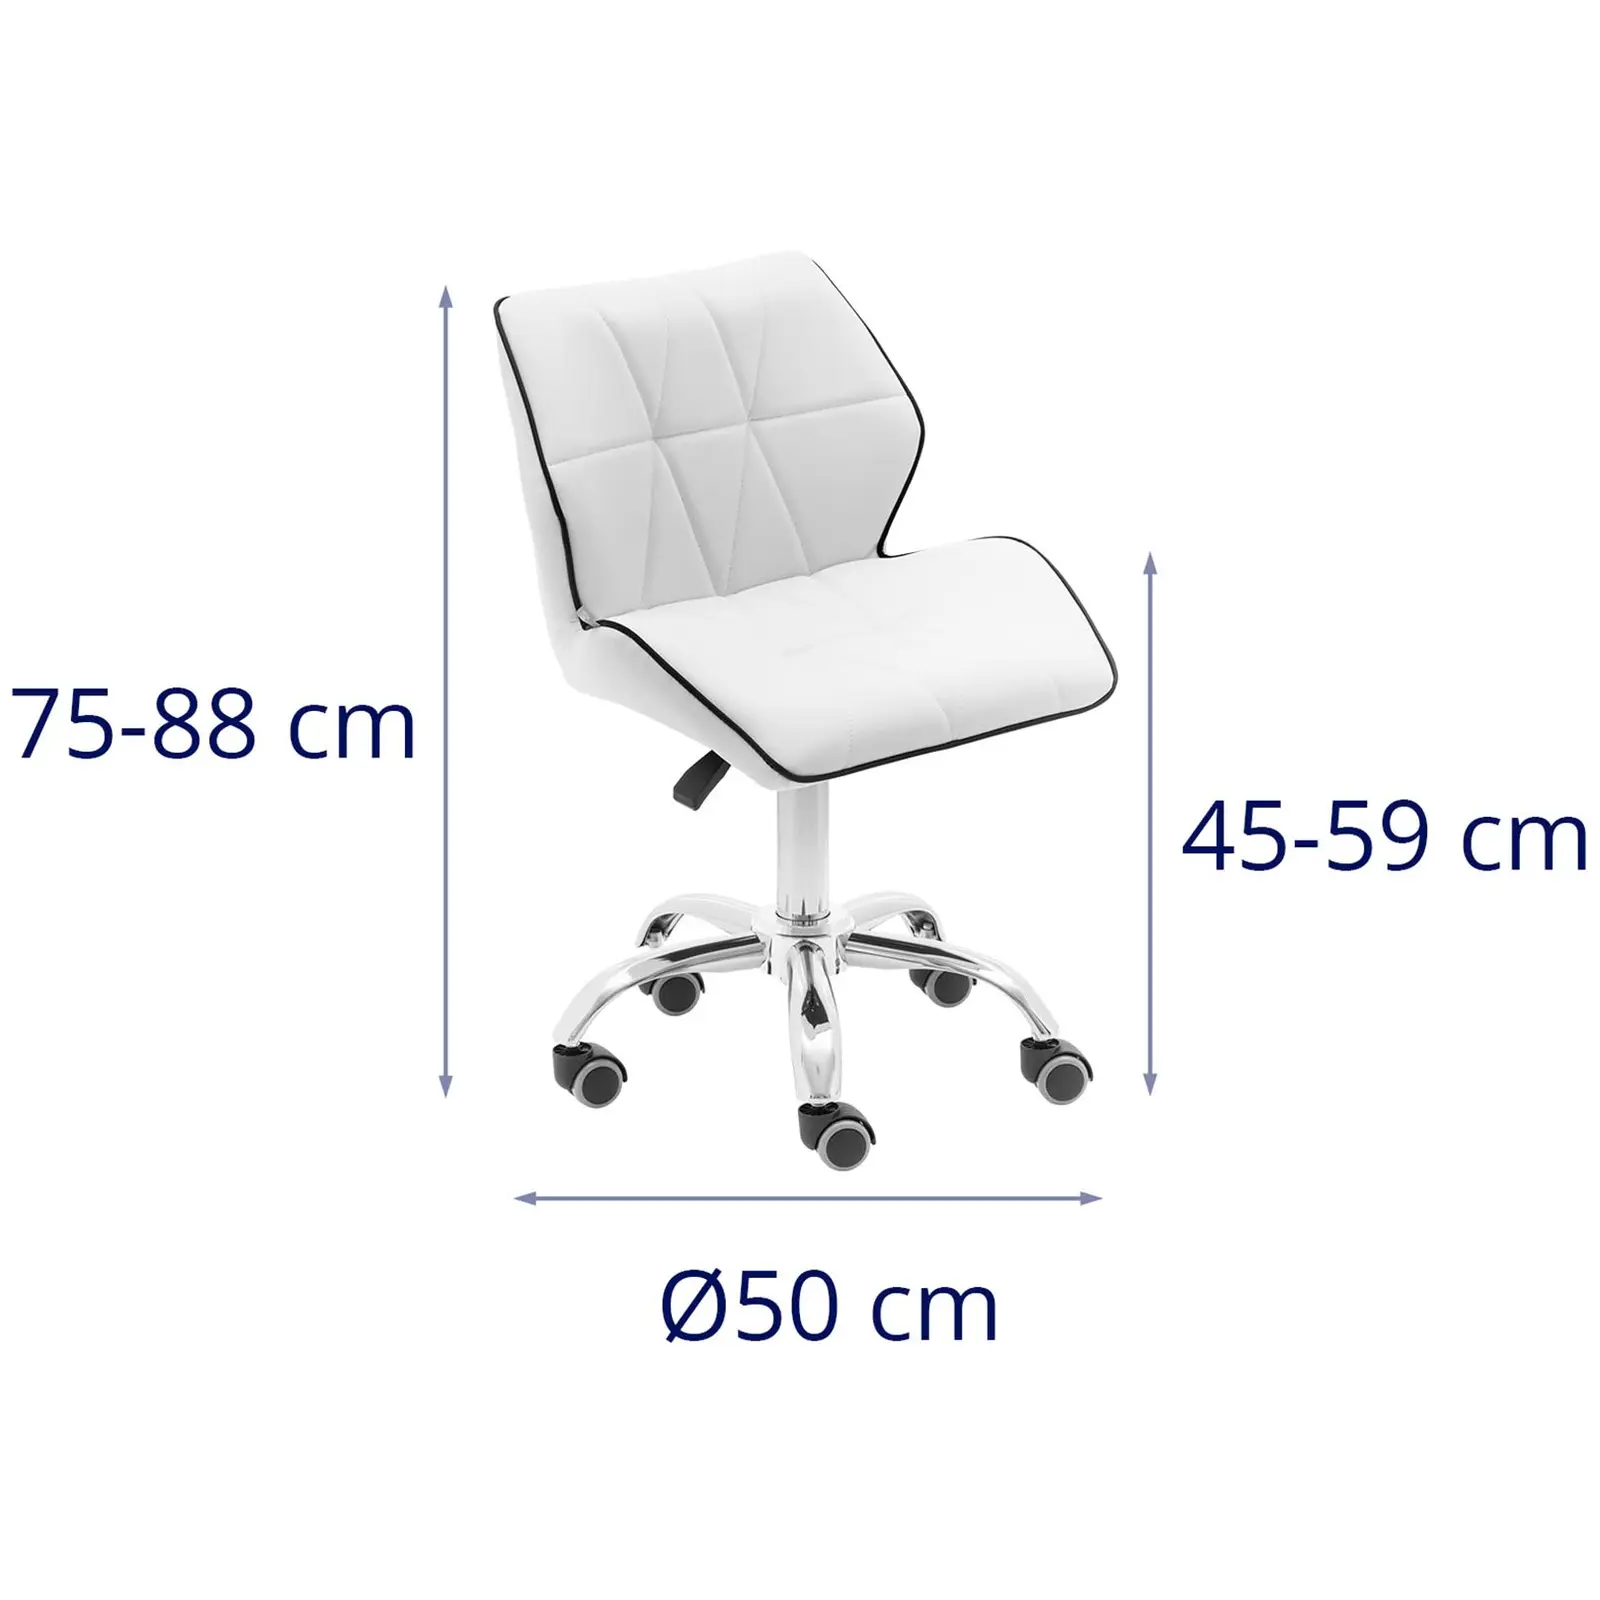 Arbetsstol med ryggstöd - 45 - 59 cm - 150 kg - Vit